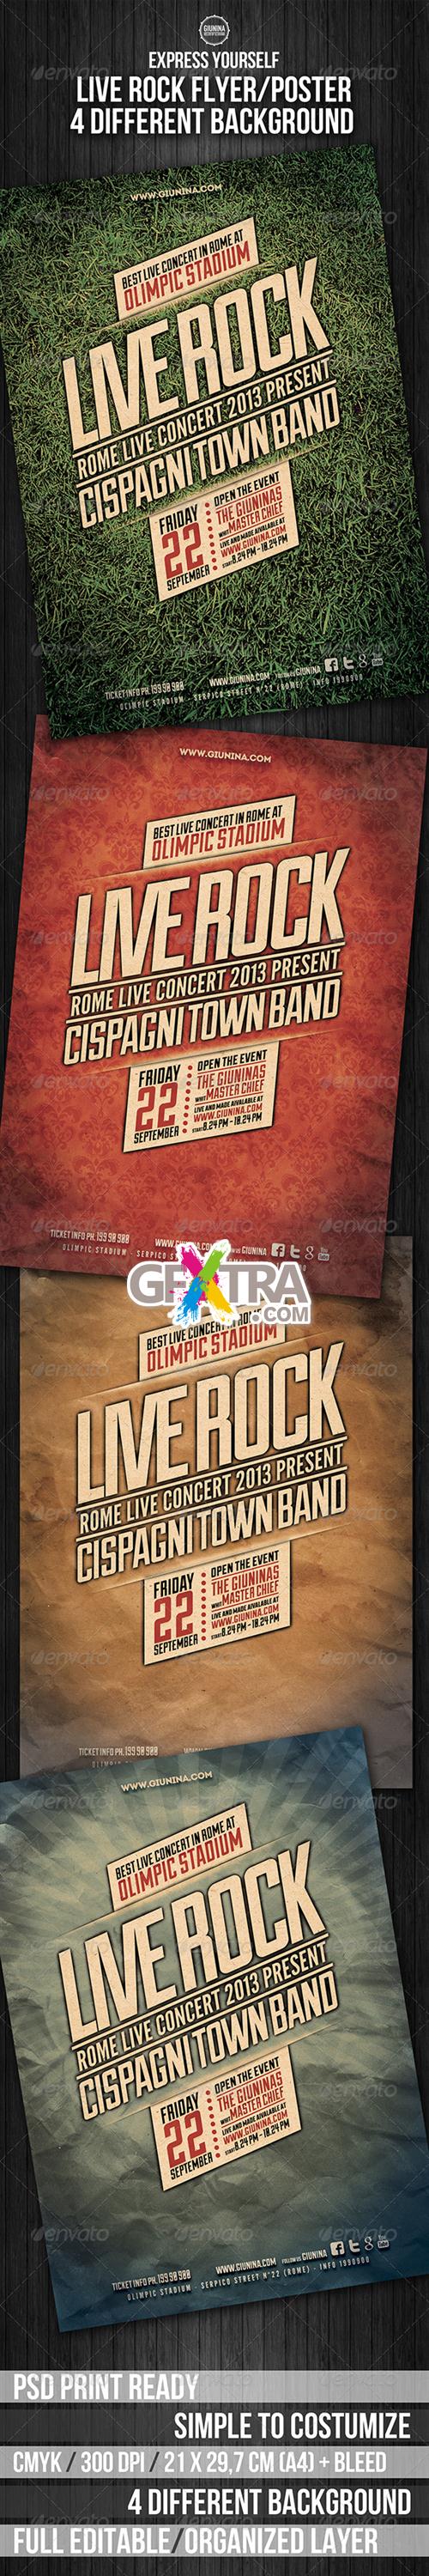 GraphicRiver - Live Rock Flyer/Poster